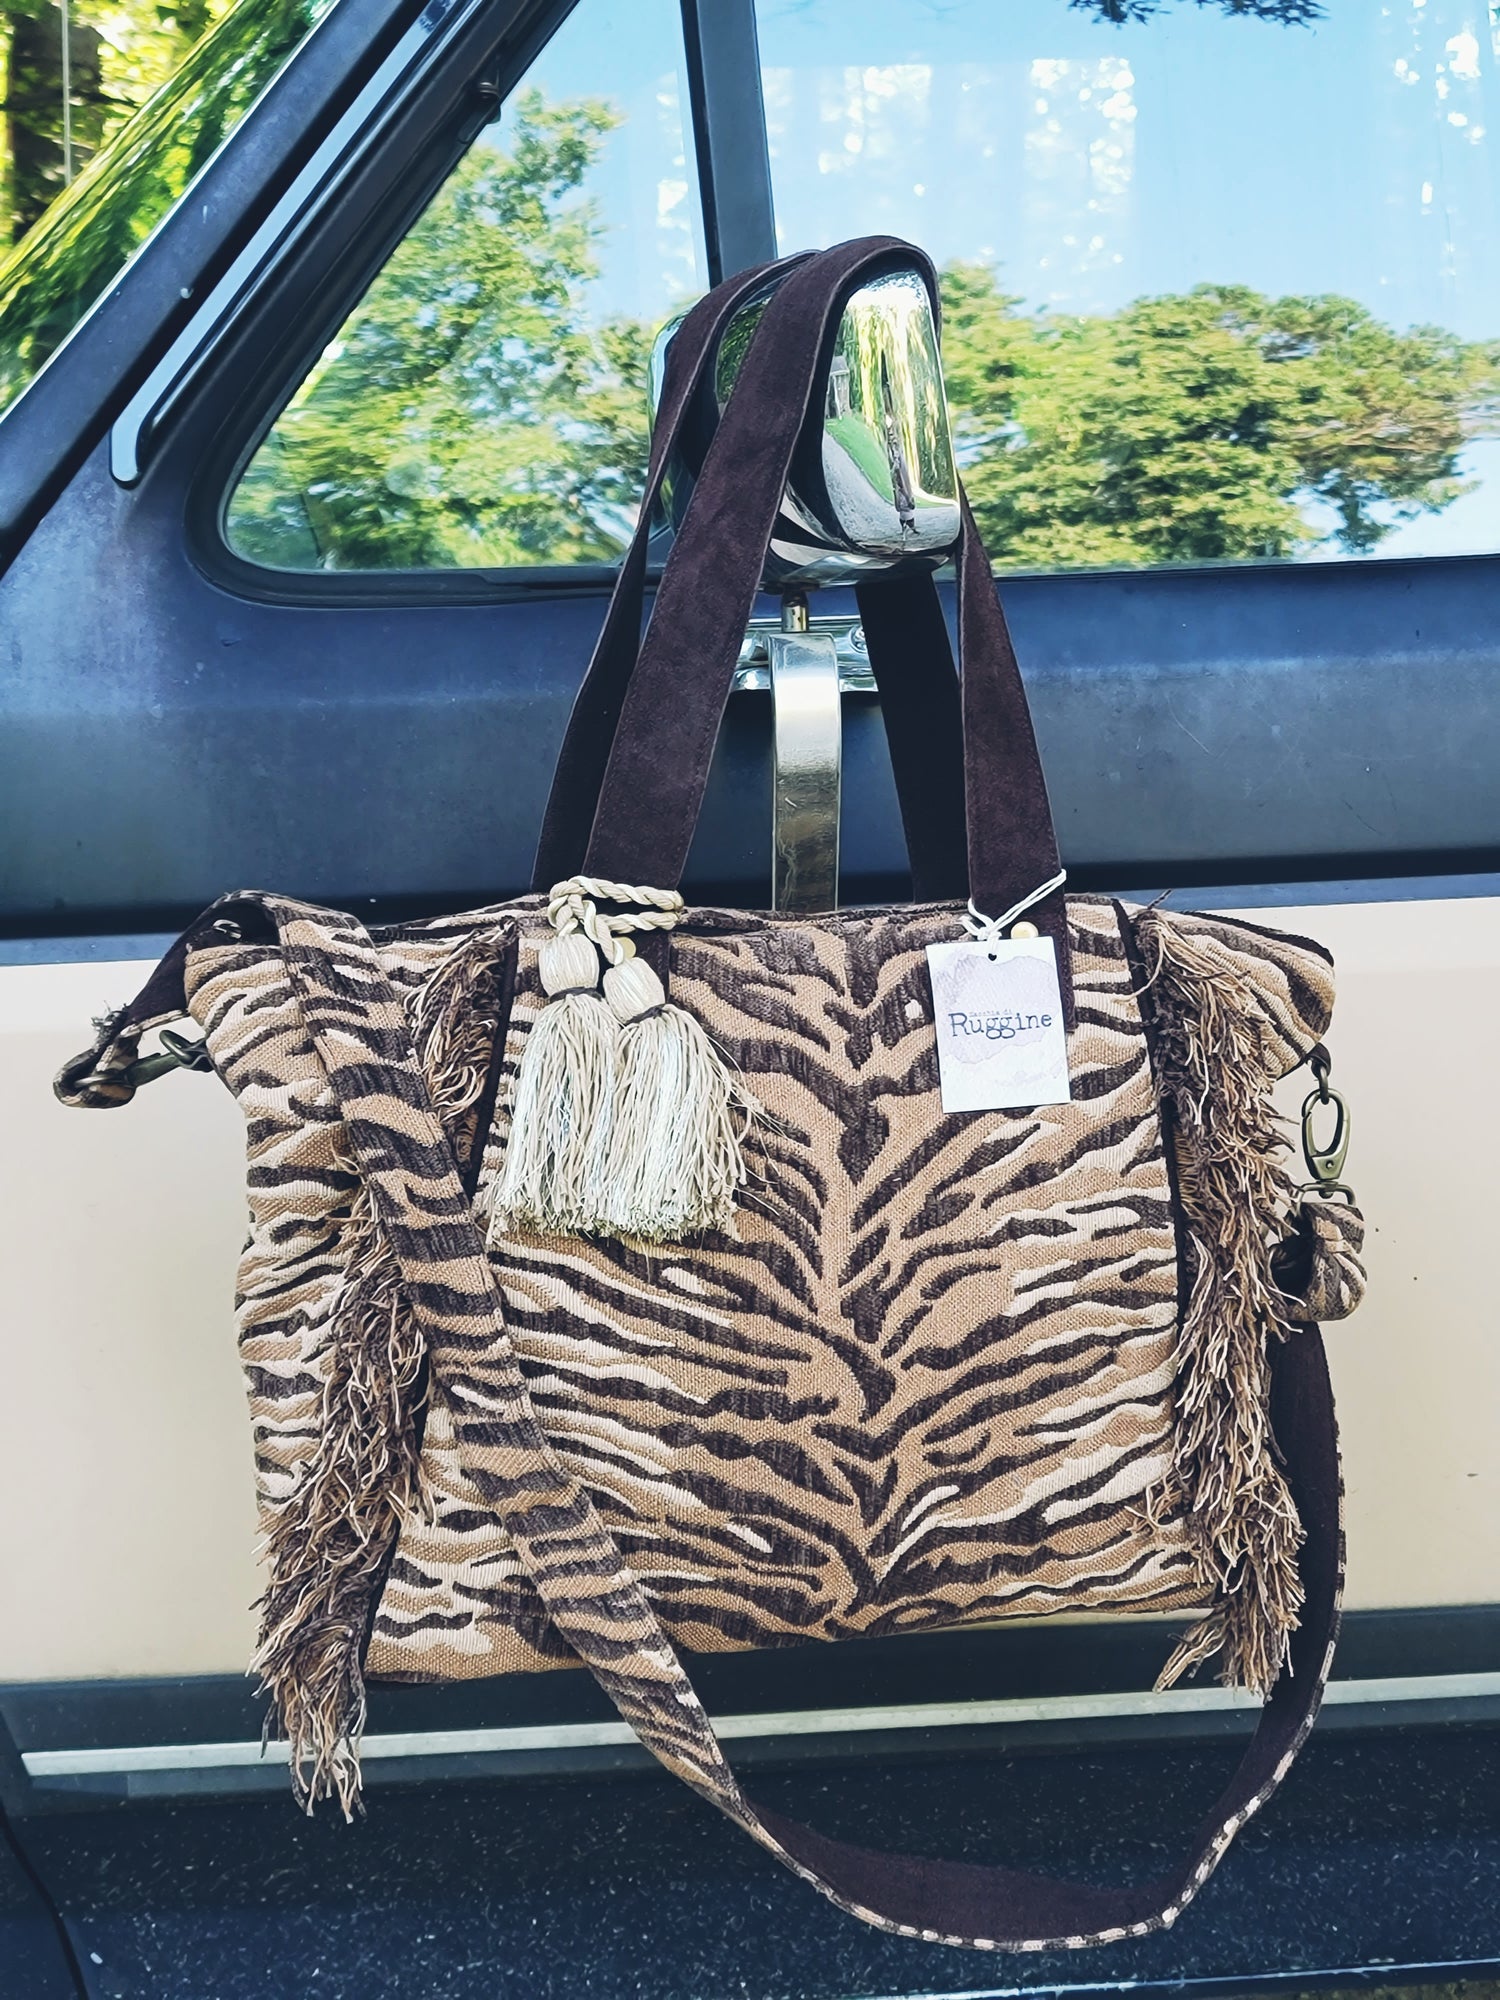 Mystery Bag! – Julie Mollo!